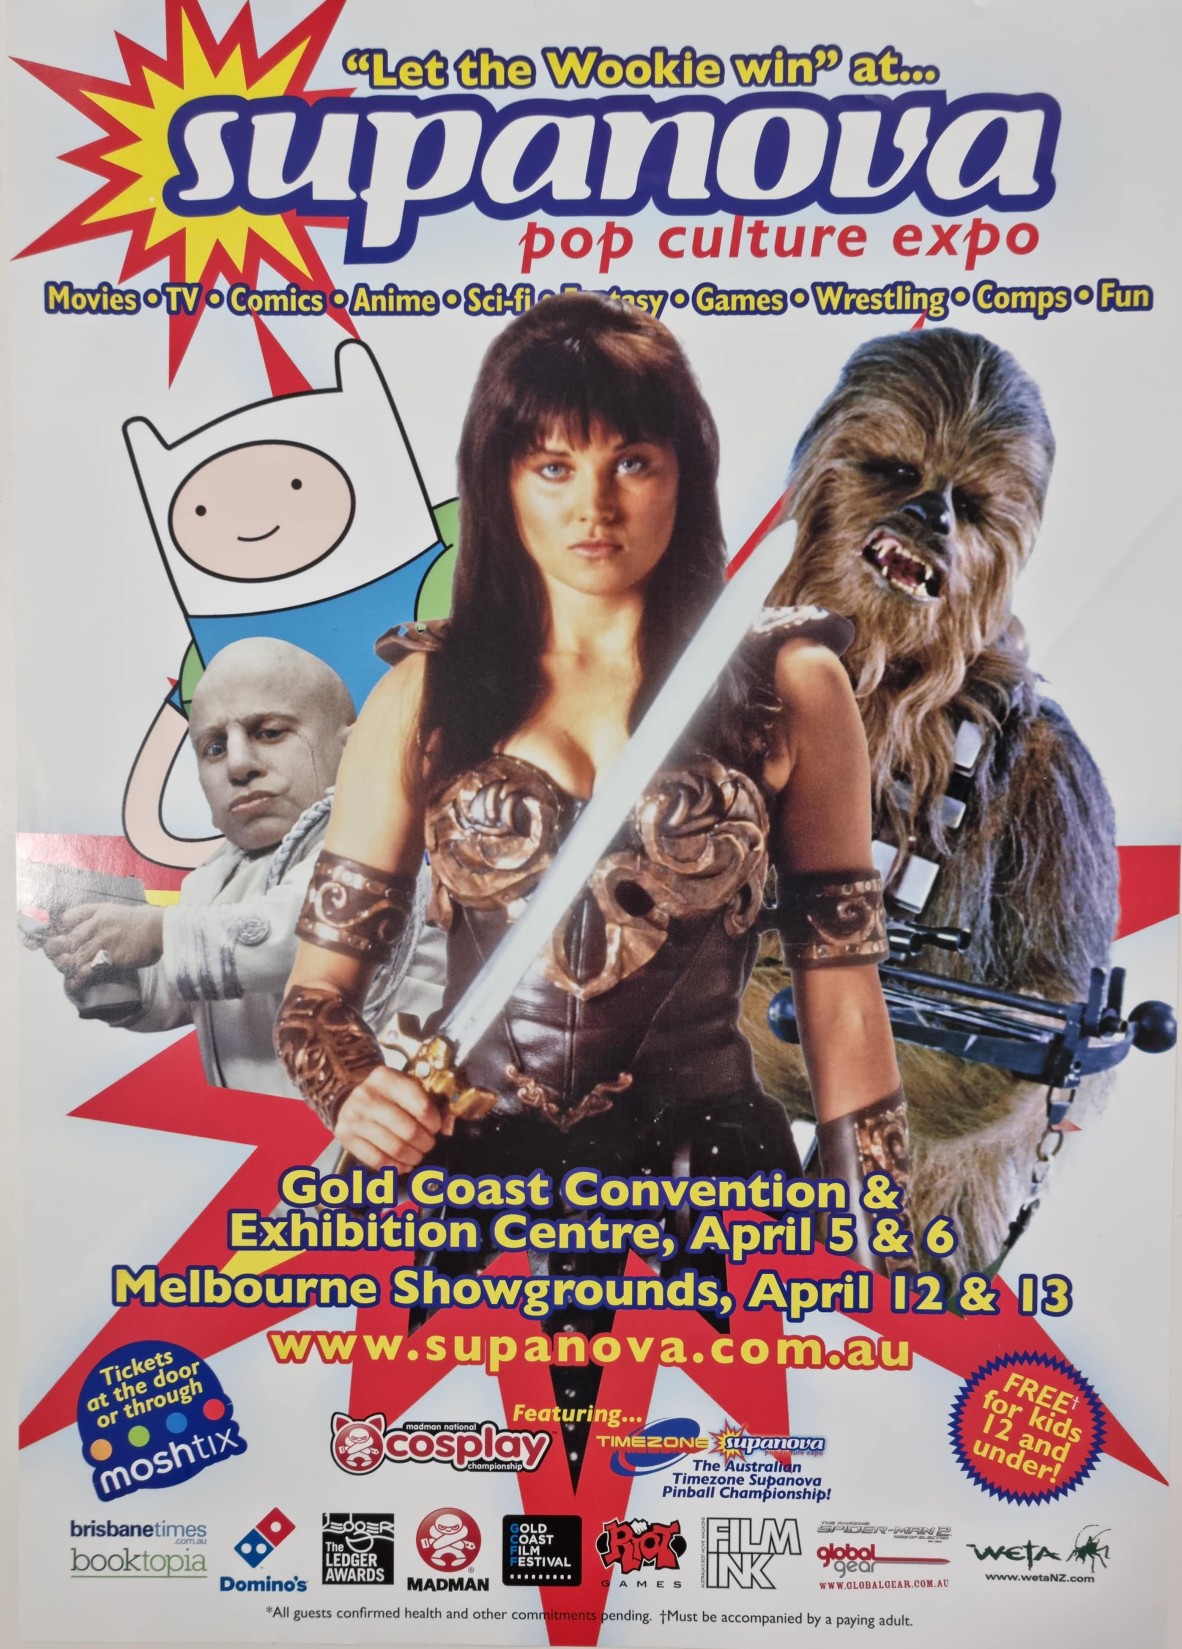 Supanova pop culture expo Gold Coast Convention  exhibition centre April 5-6